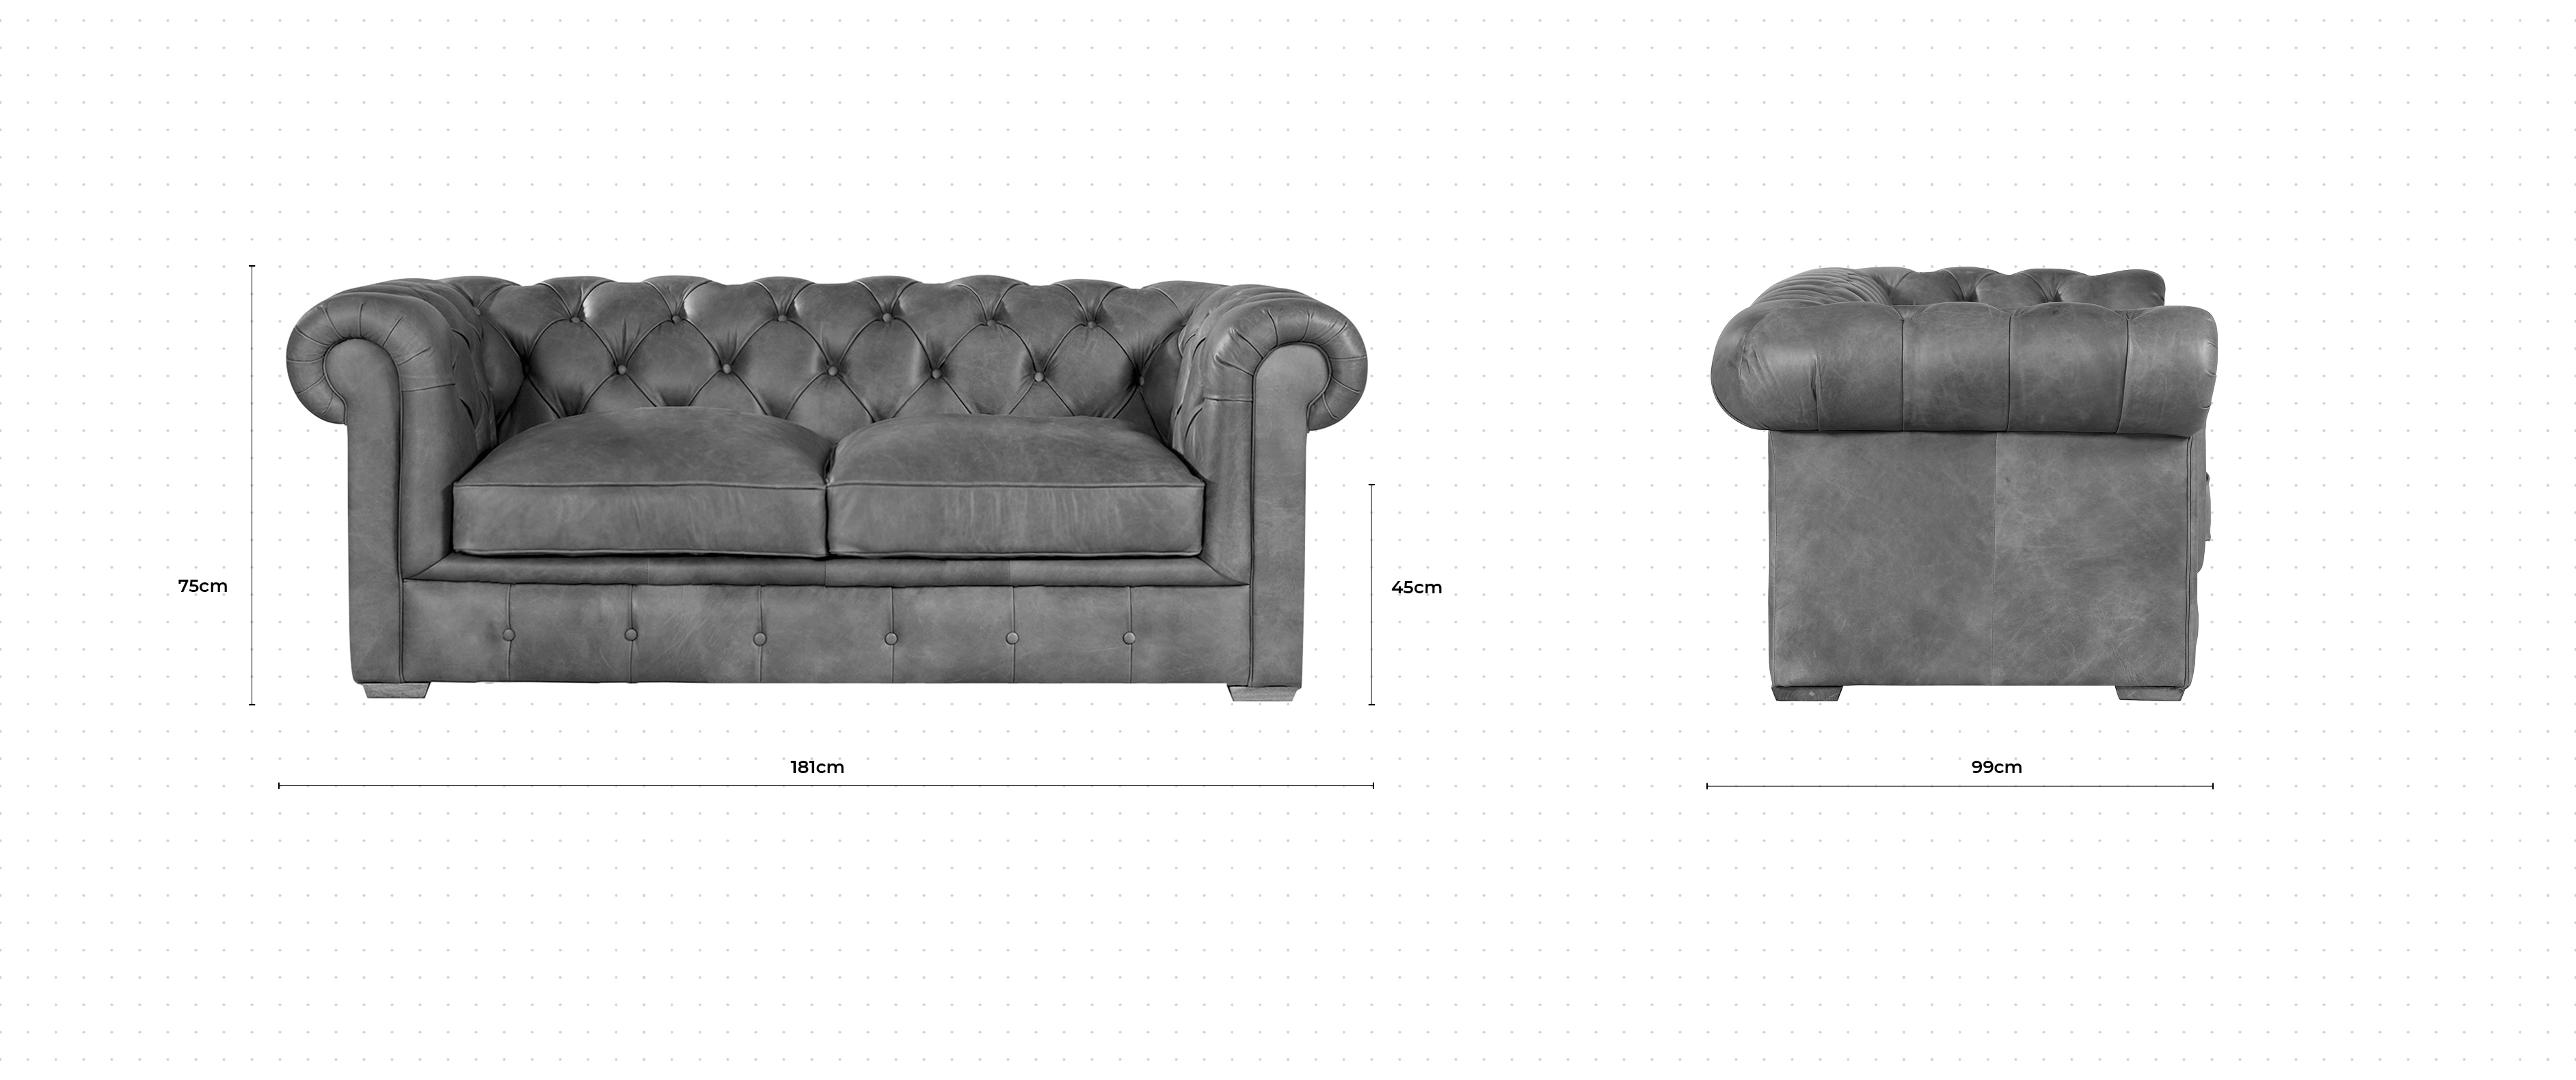 Gainsborough 2 Seater Sofa dimensions